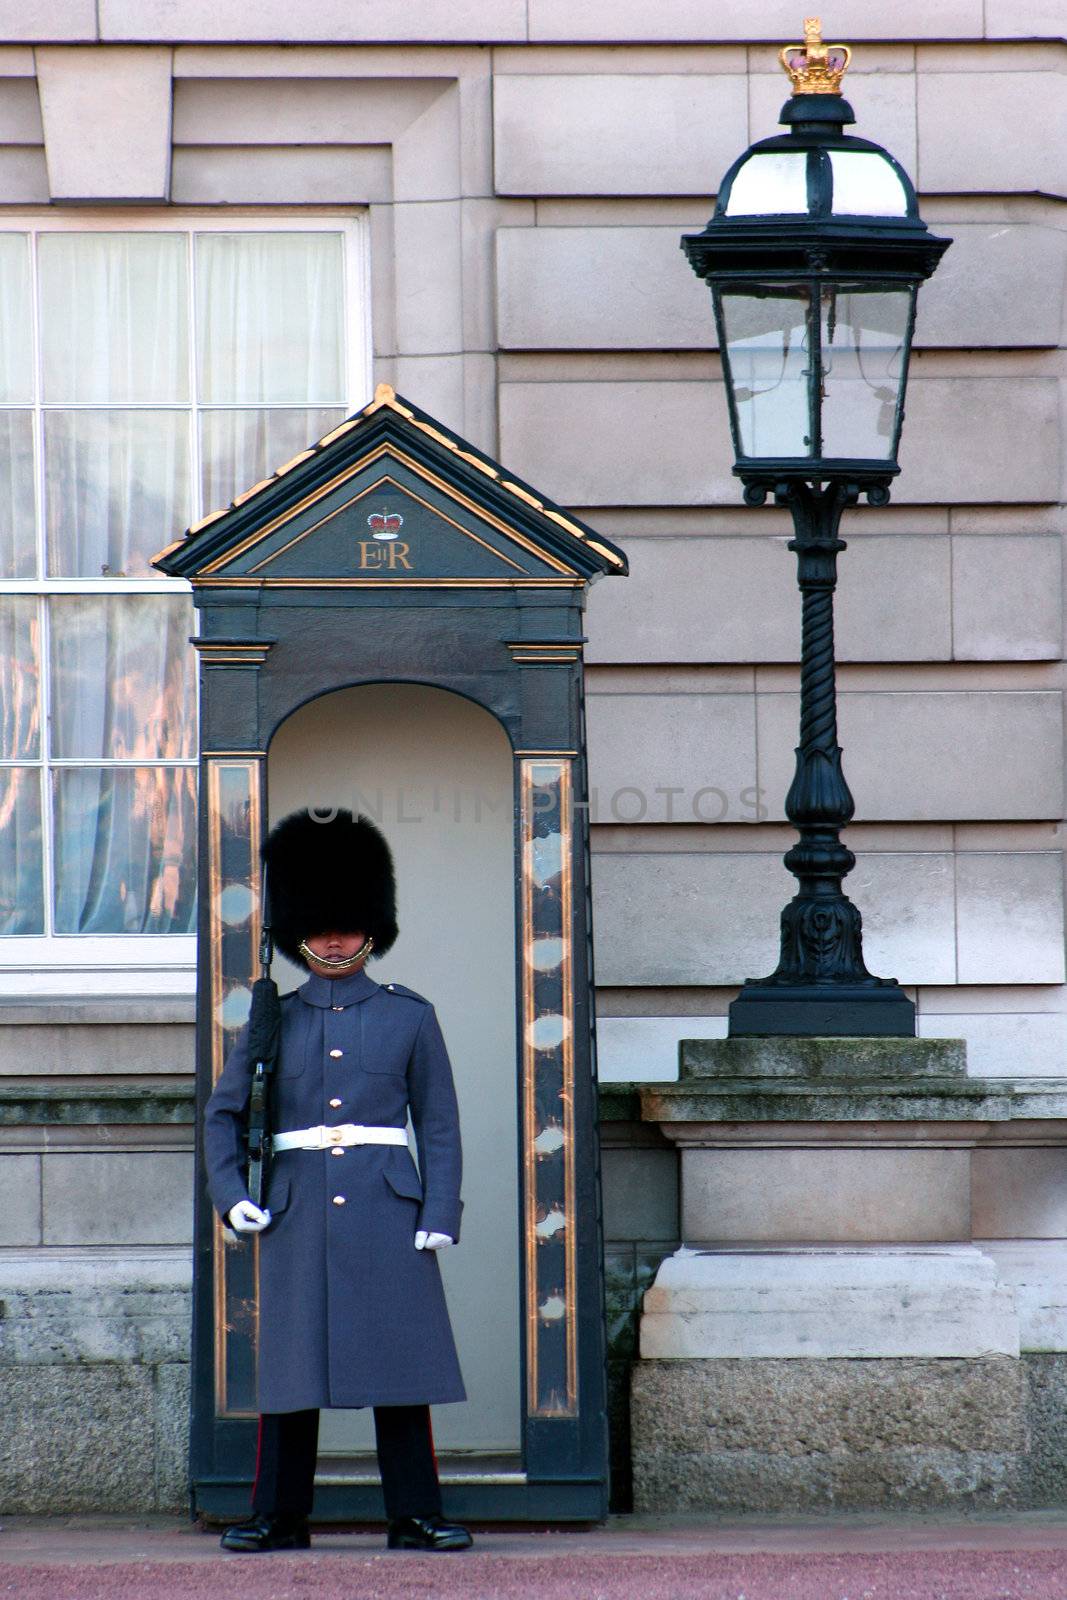 On guard  Royal guard   London  U.K.